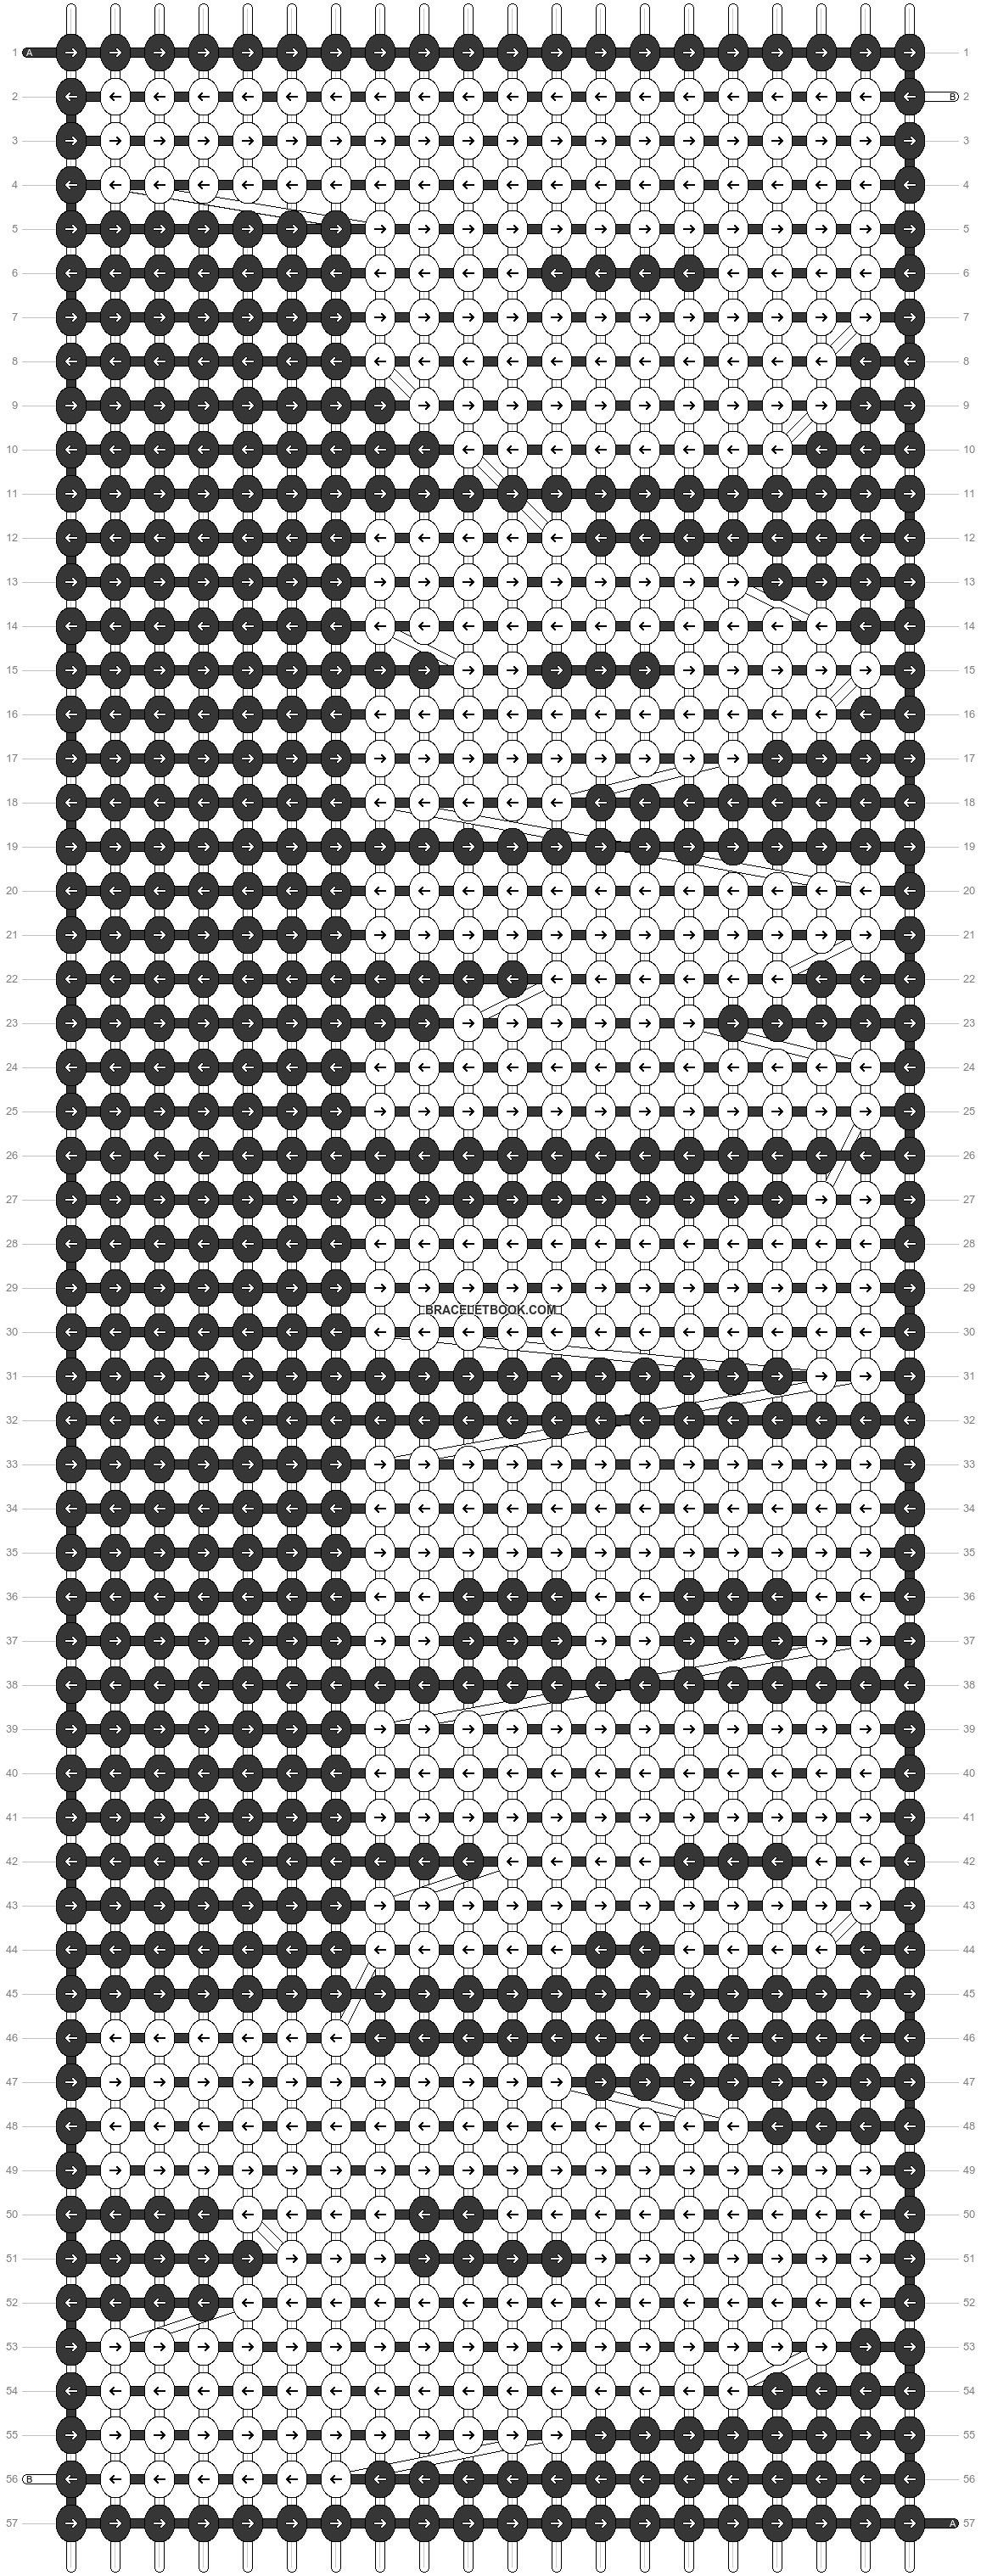 Alpha Pattern #5722, BraceletBook.com